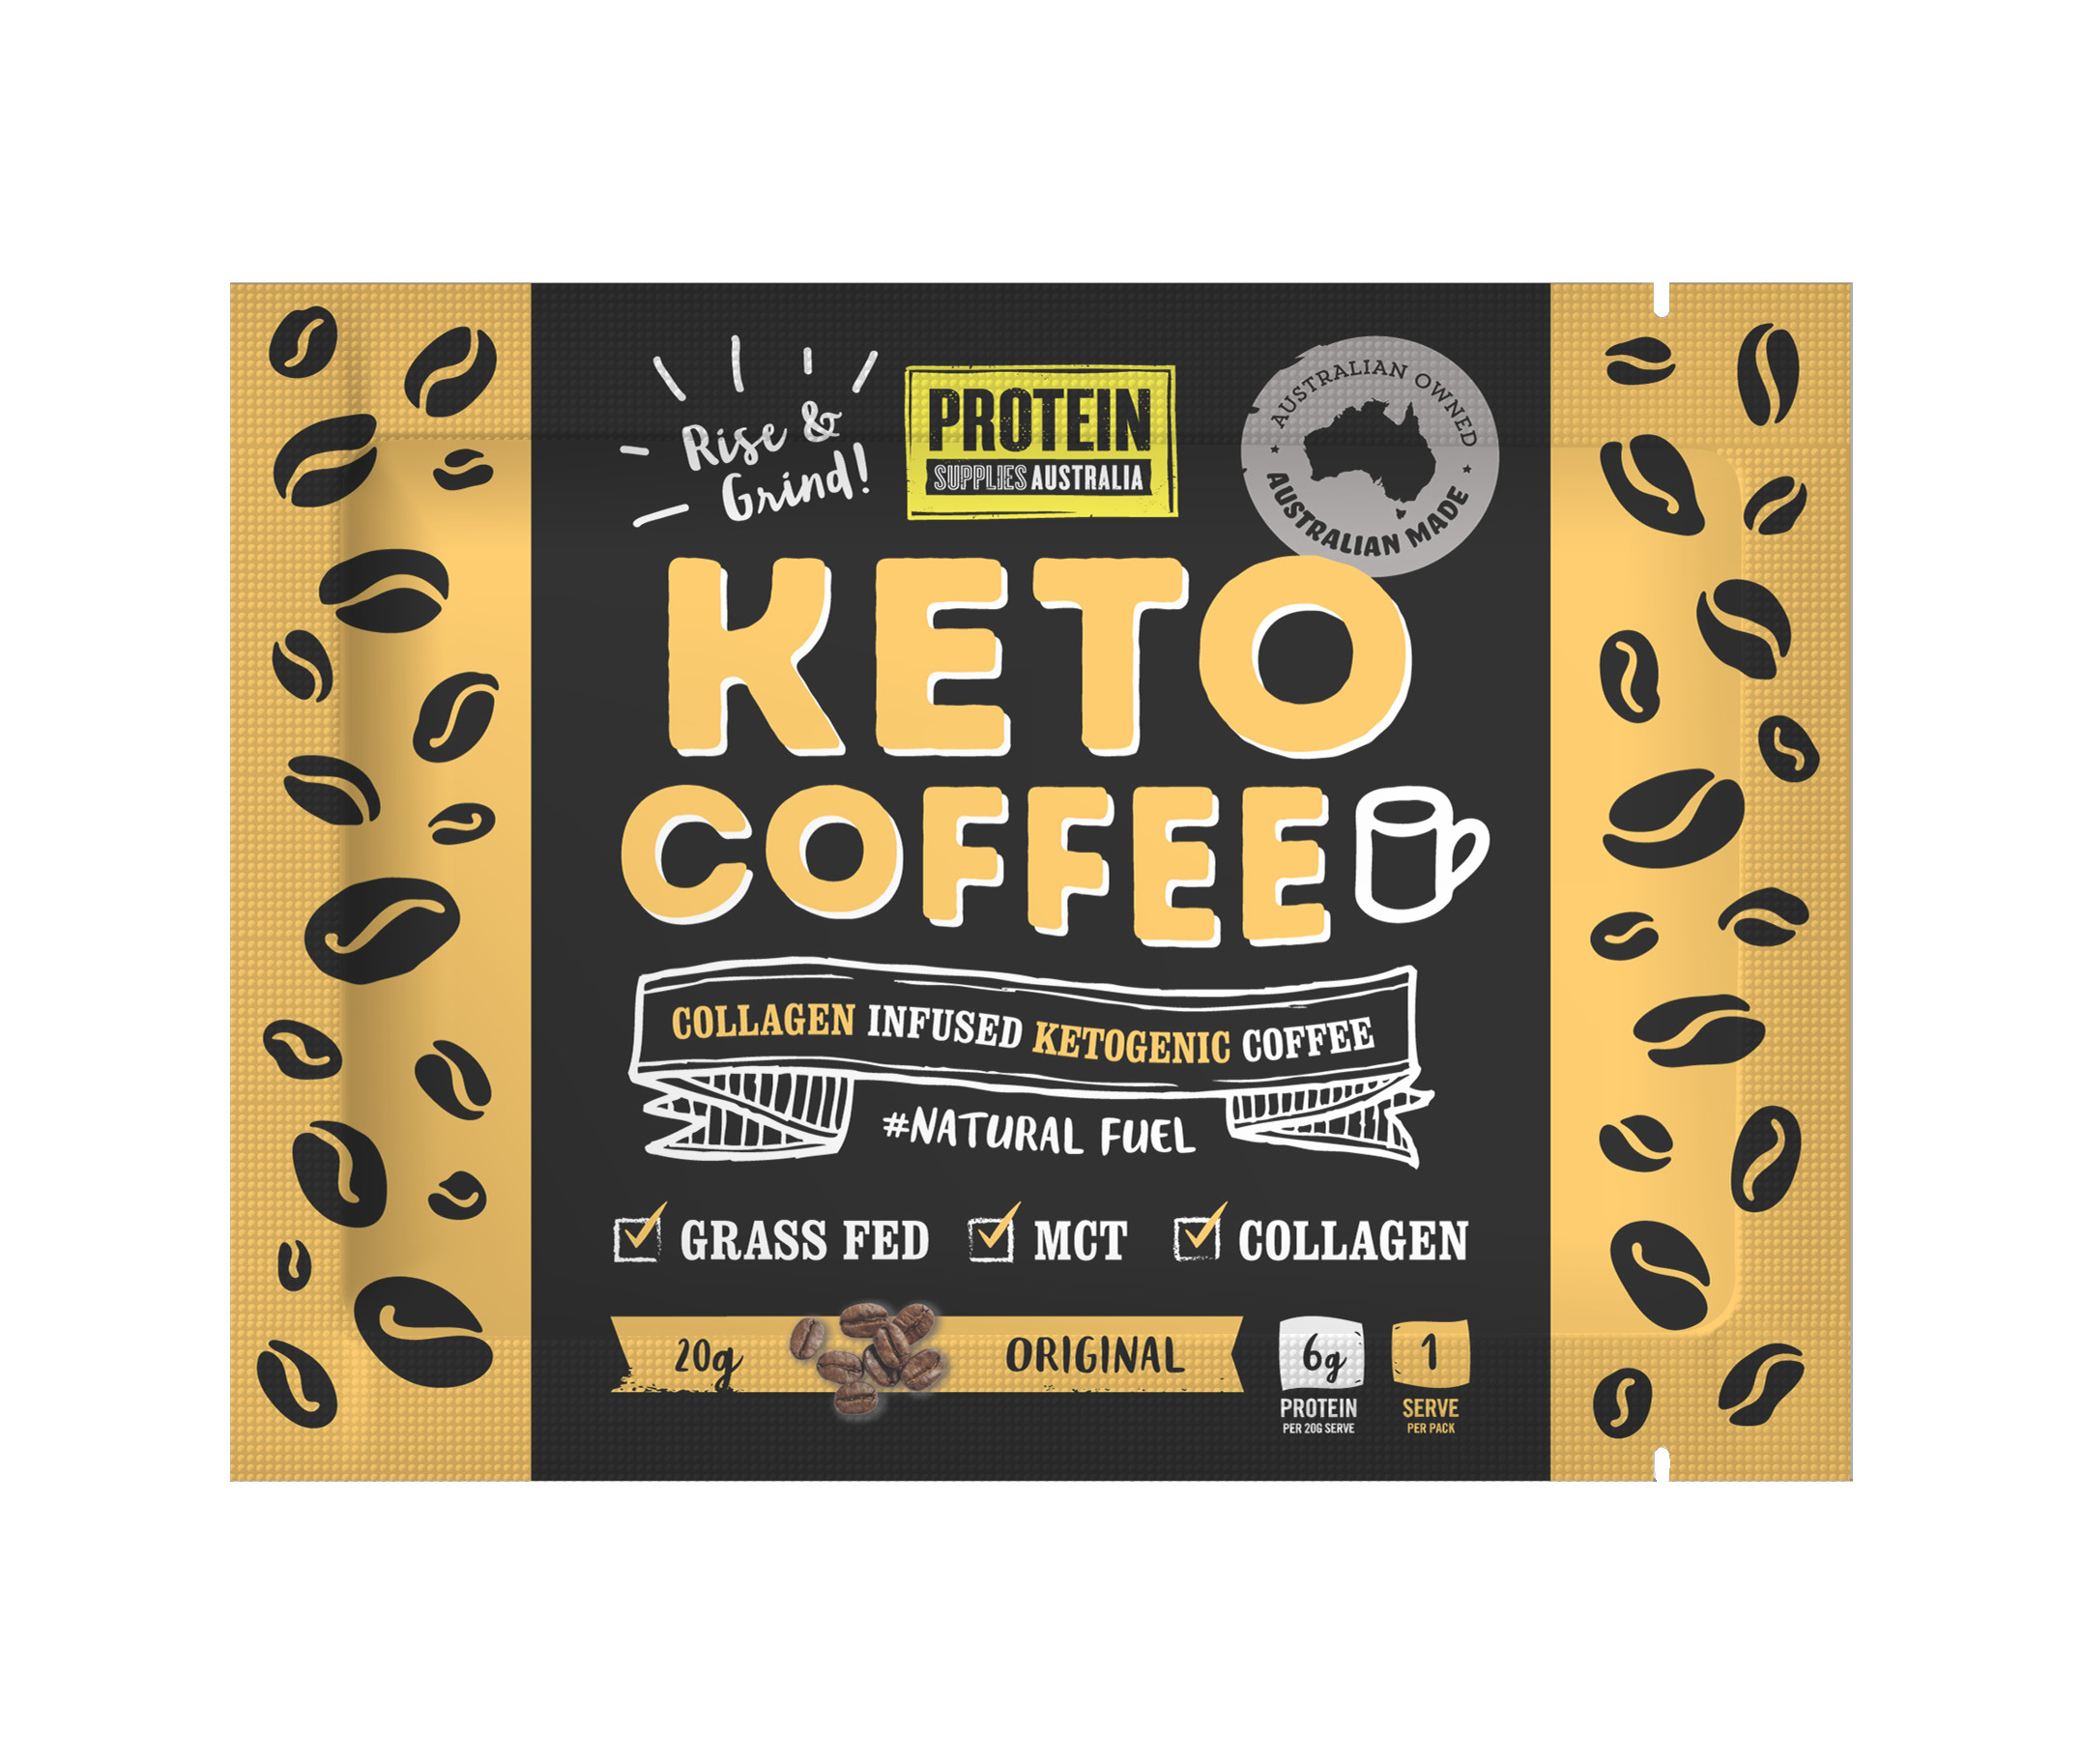 Original Keto Diet
 Keto Coffee Original – Protein Supplies Australia